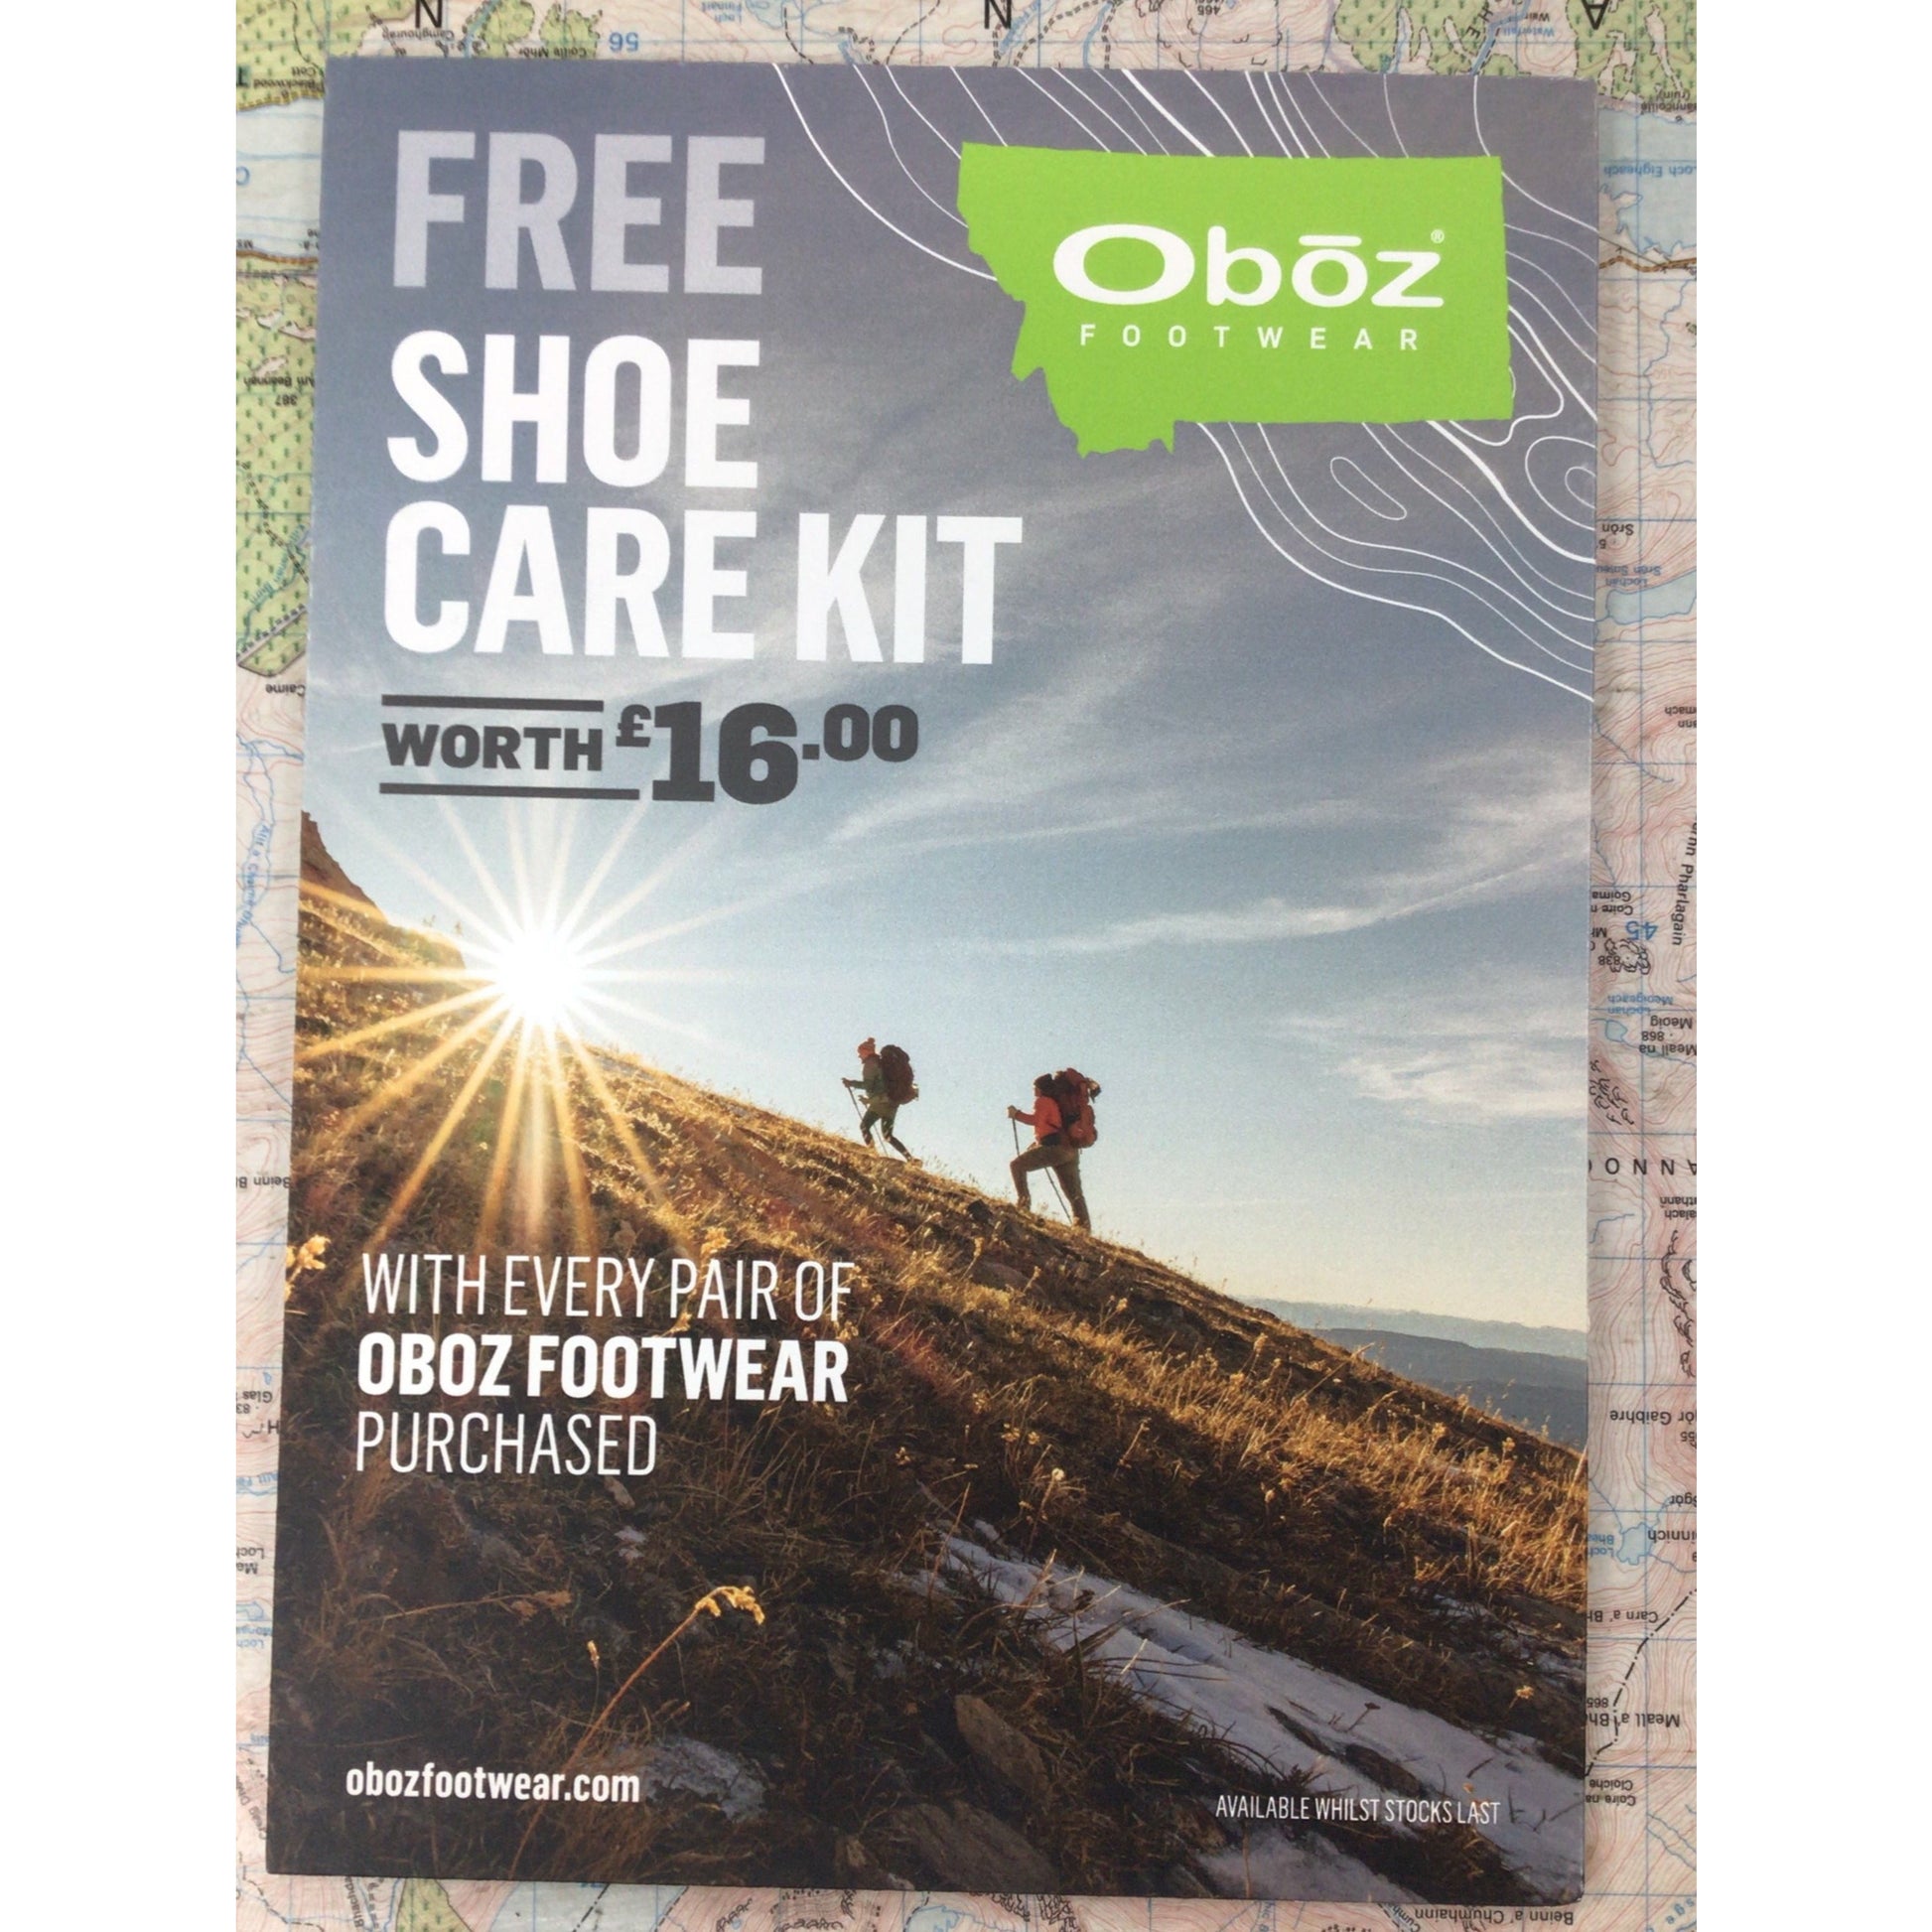 Oboz   Footwear Care Kit